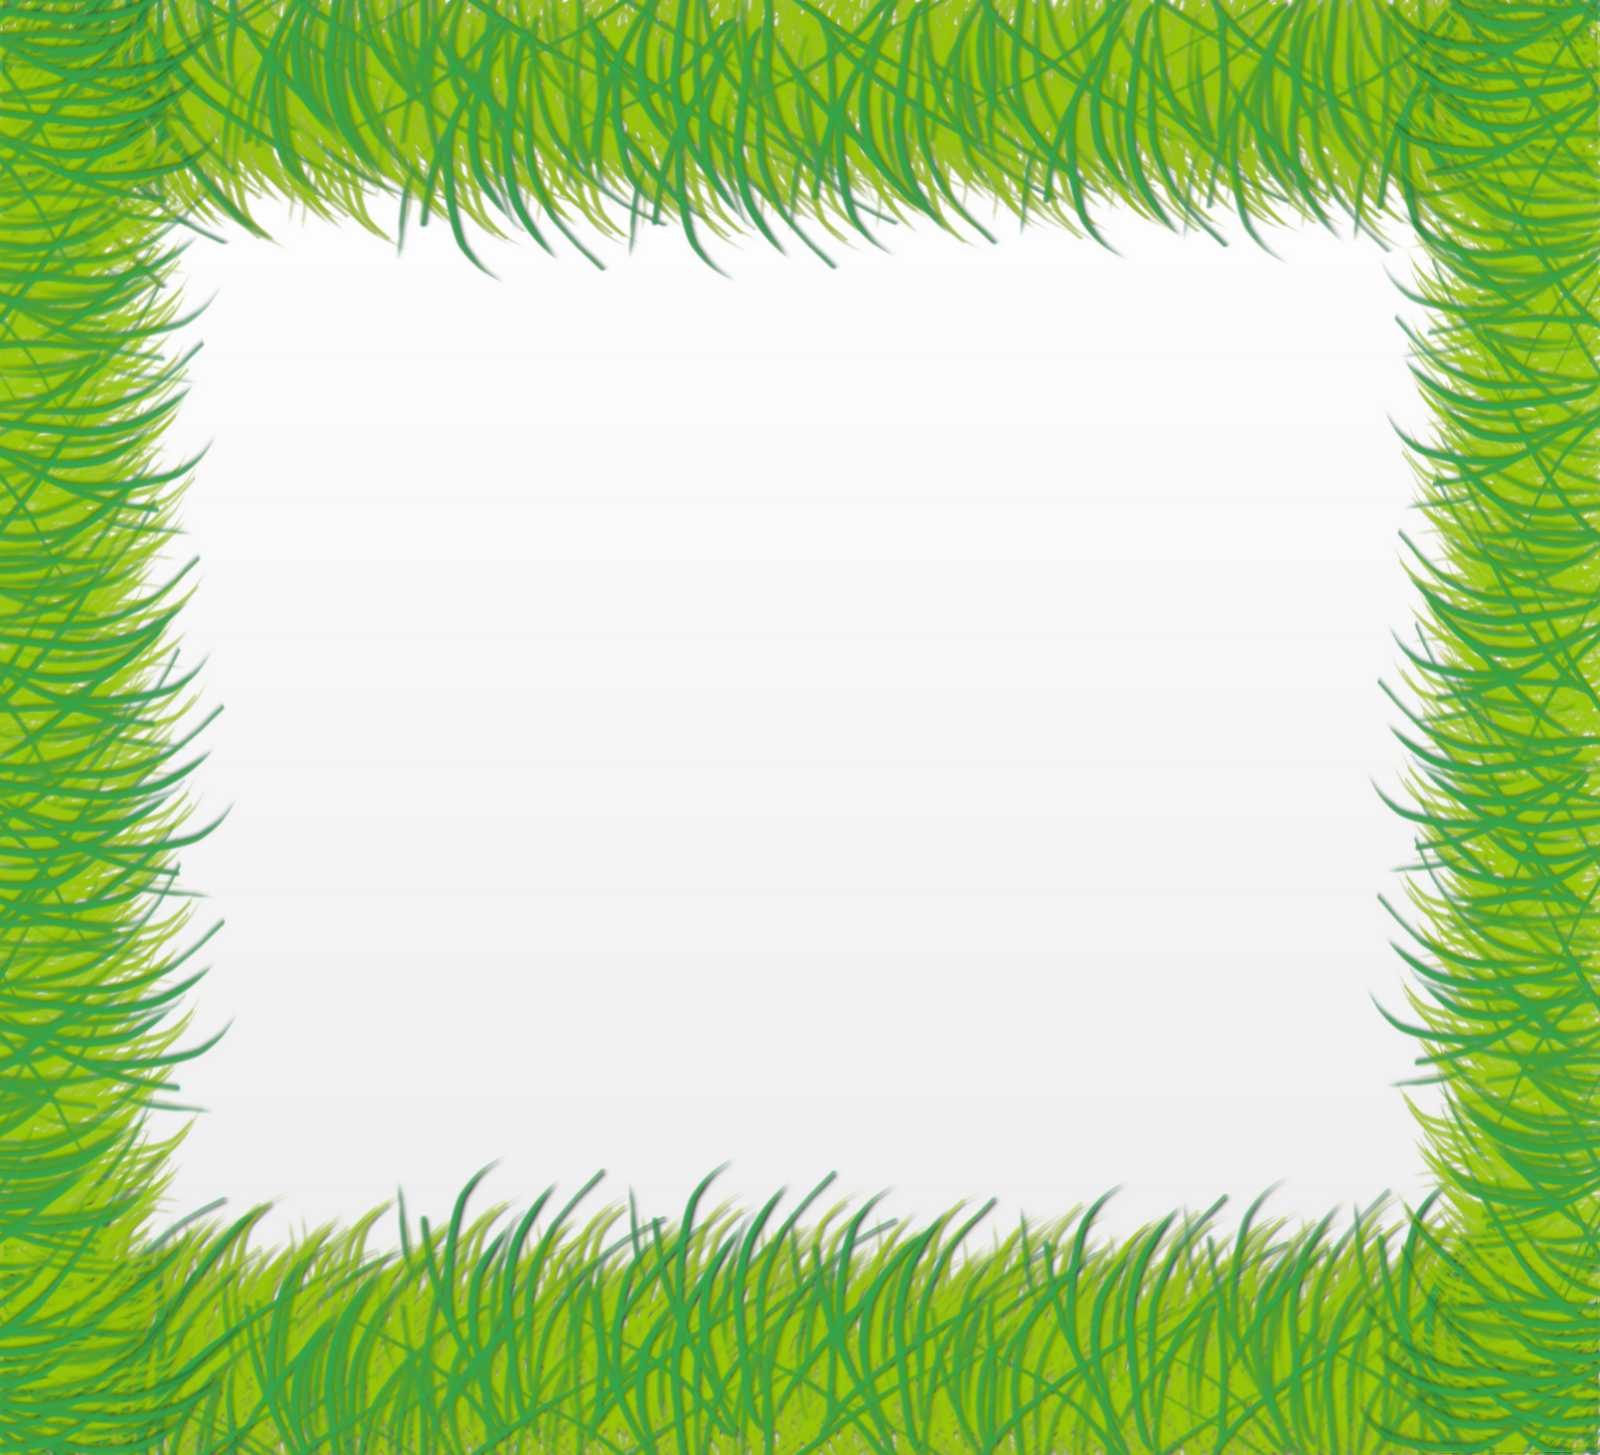 clip art grass border - photo #12